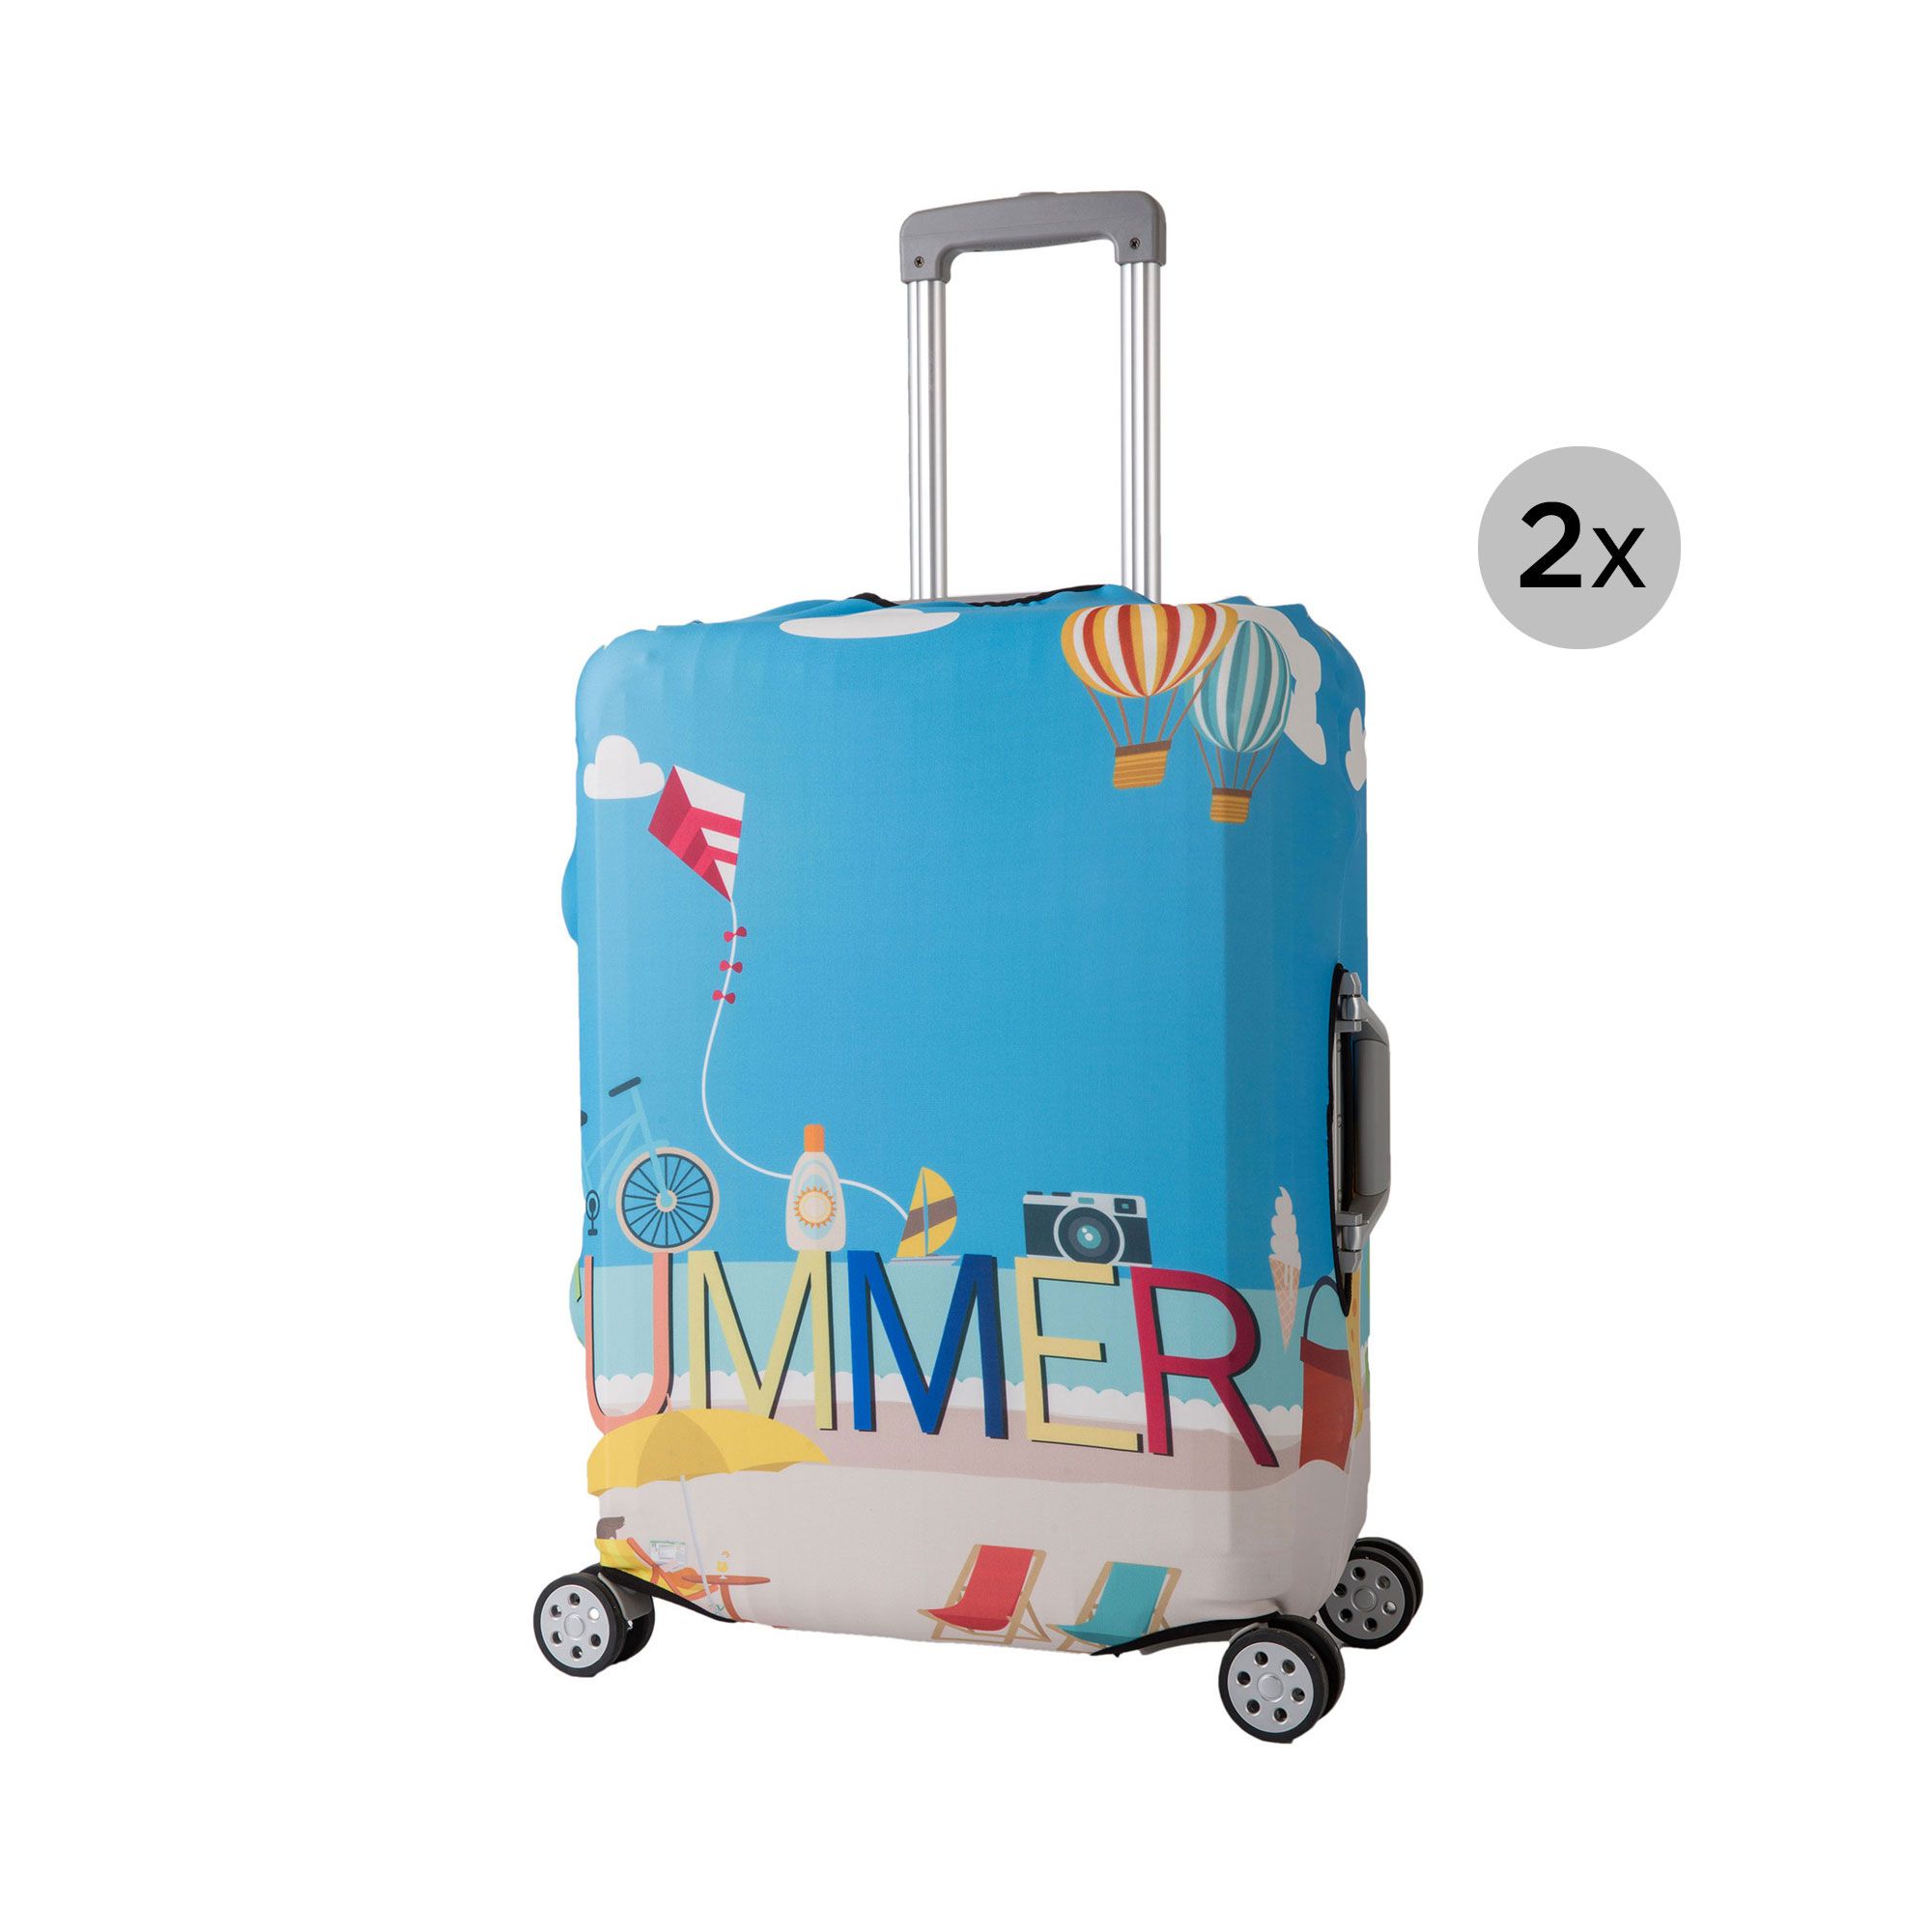 PERIEA® Koffer-Schutzhüllen strapazierfähig waschbar Größe Medium, 2 Stück  